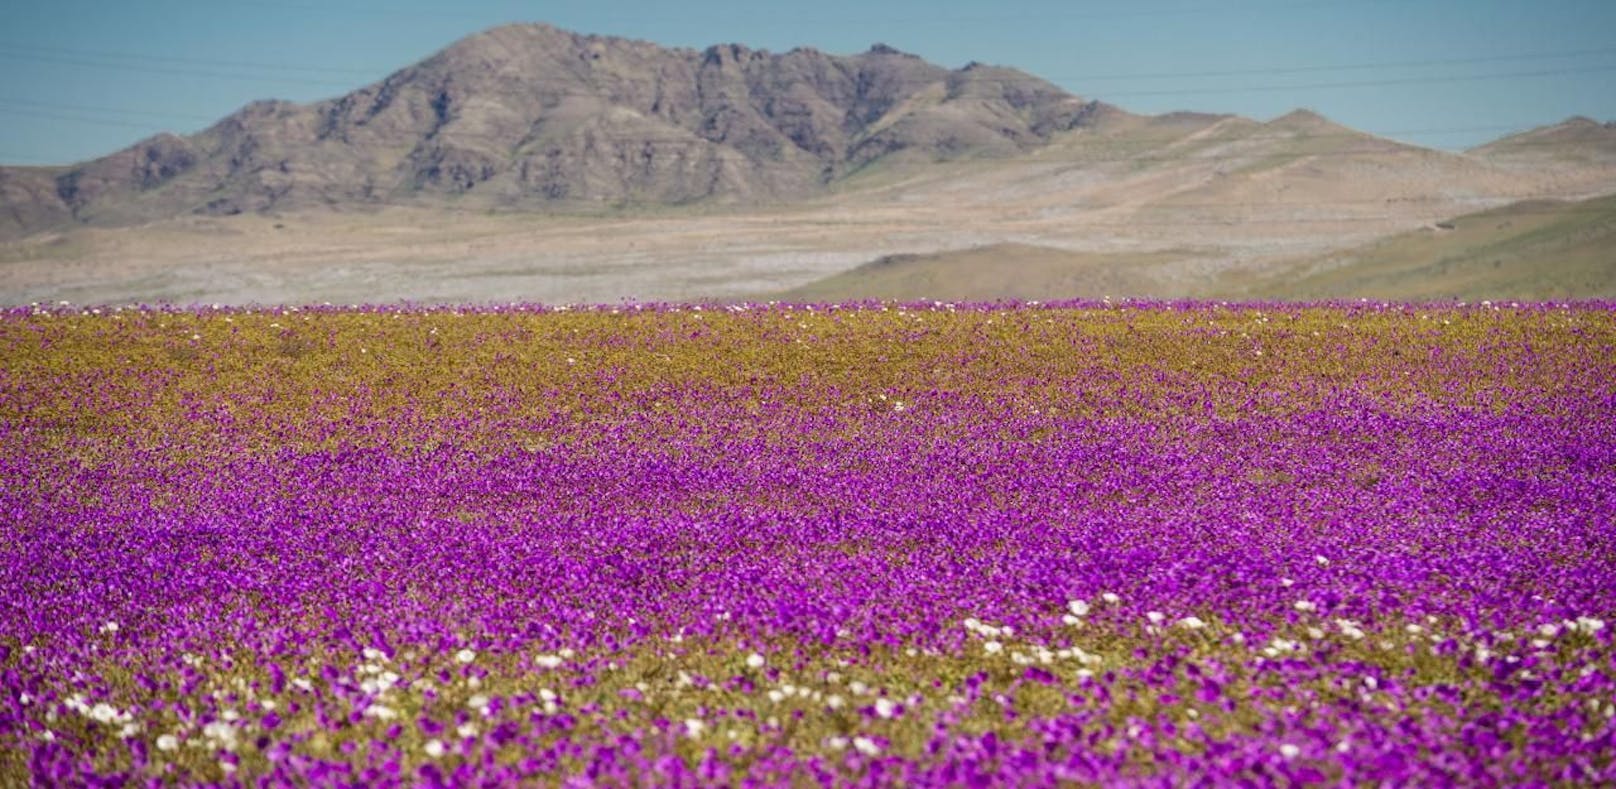 Atacama: Der trockenste Ort der Welt blüht